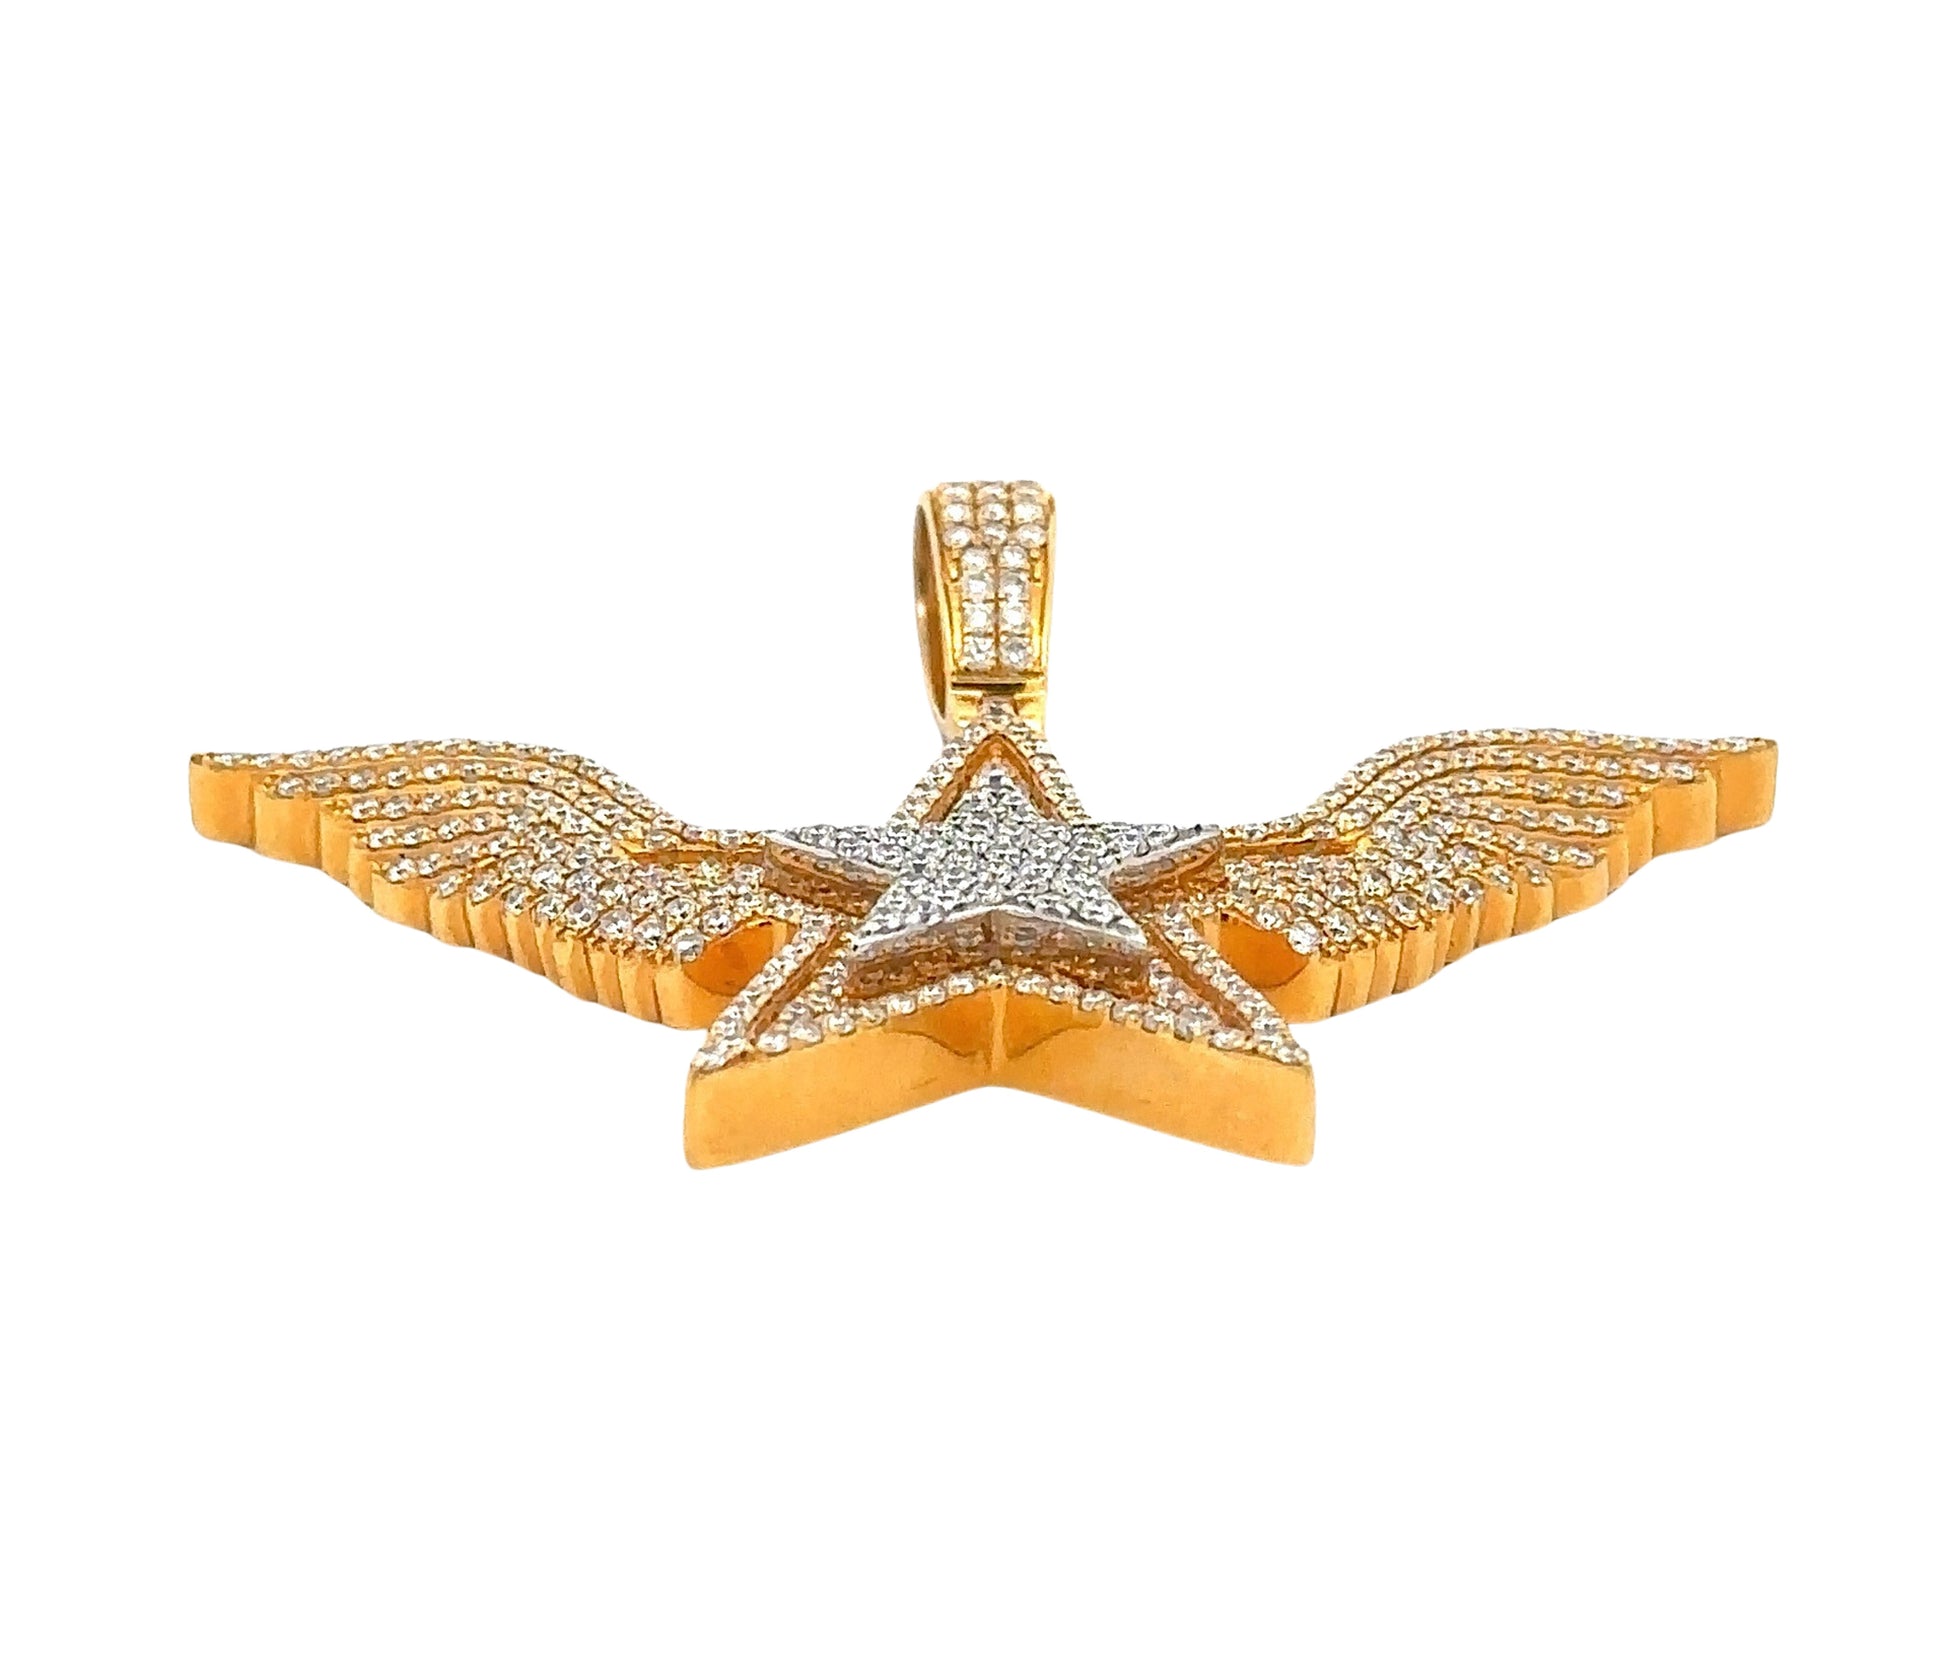 Bottom of yellow gold star pendant 